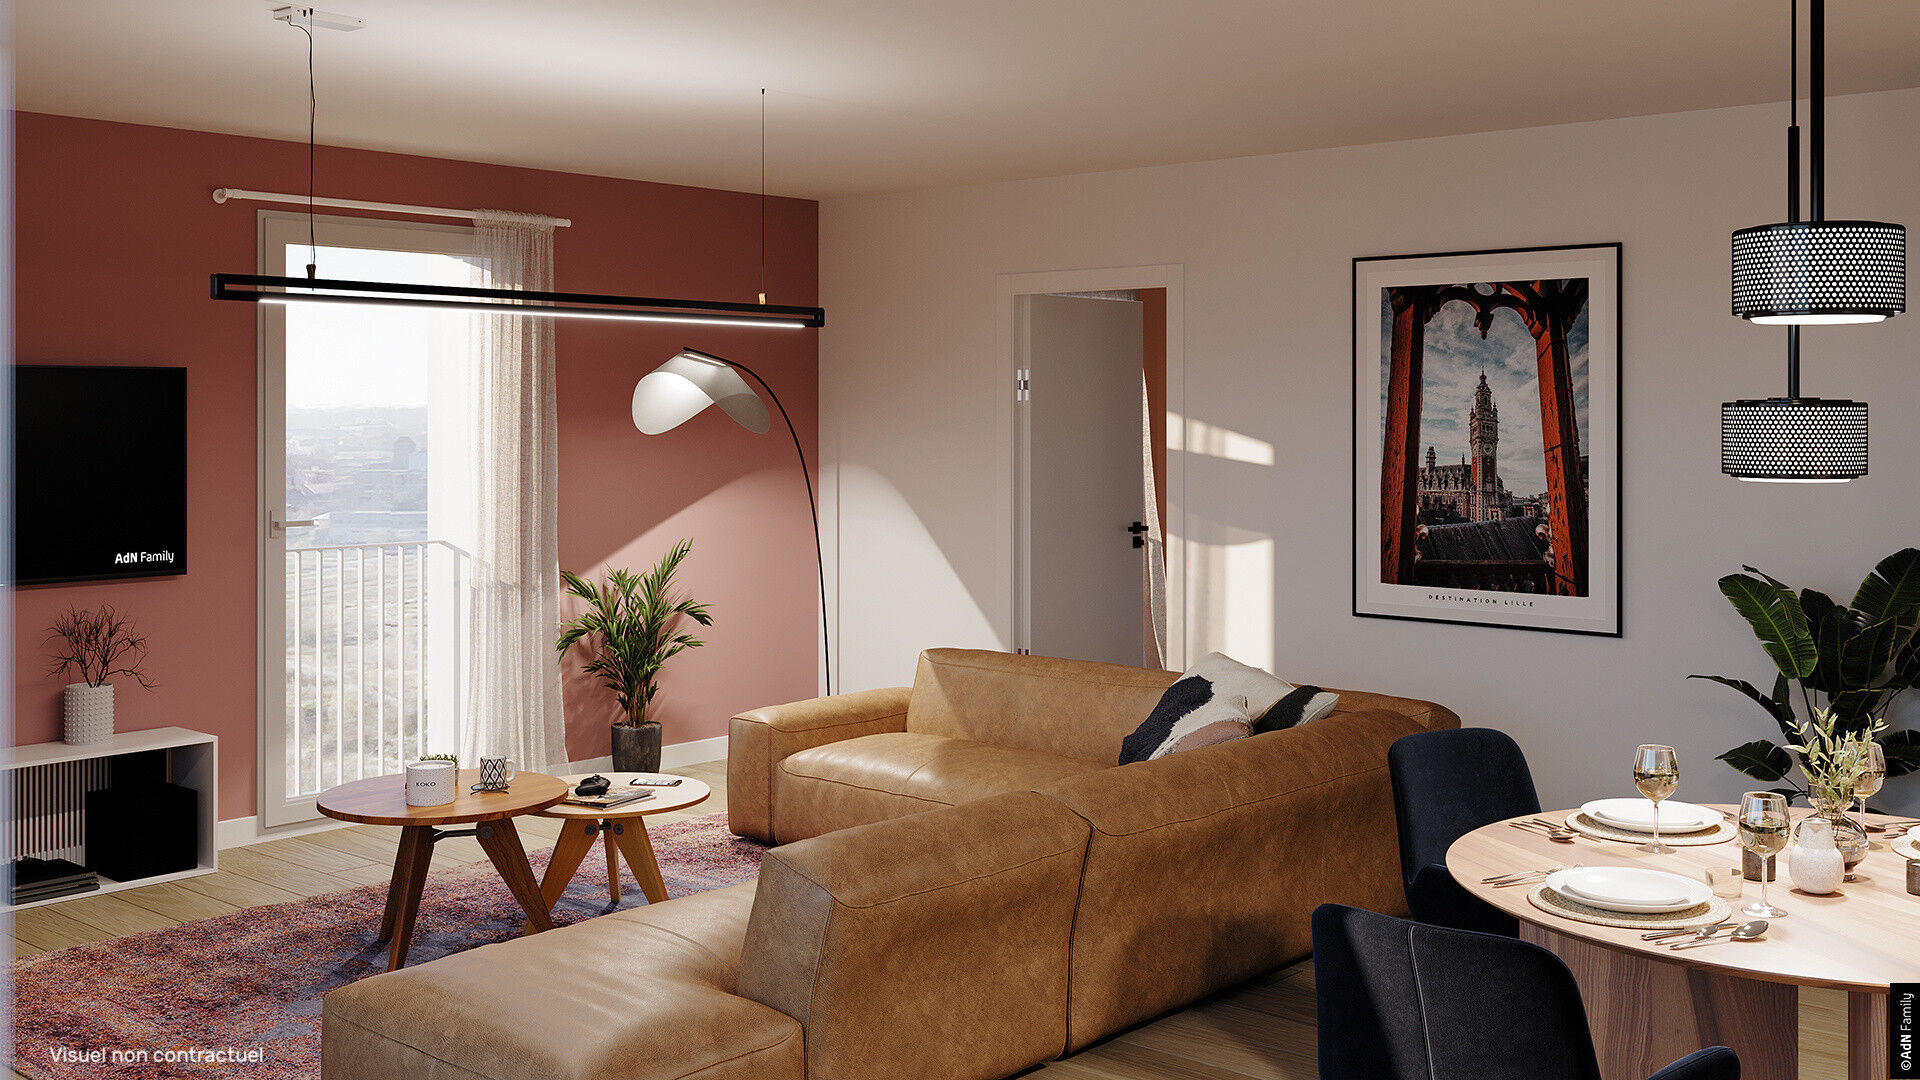 Blanc-Mesnil (Le) Appartement neuf 2 pièces 44 m²